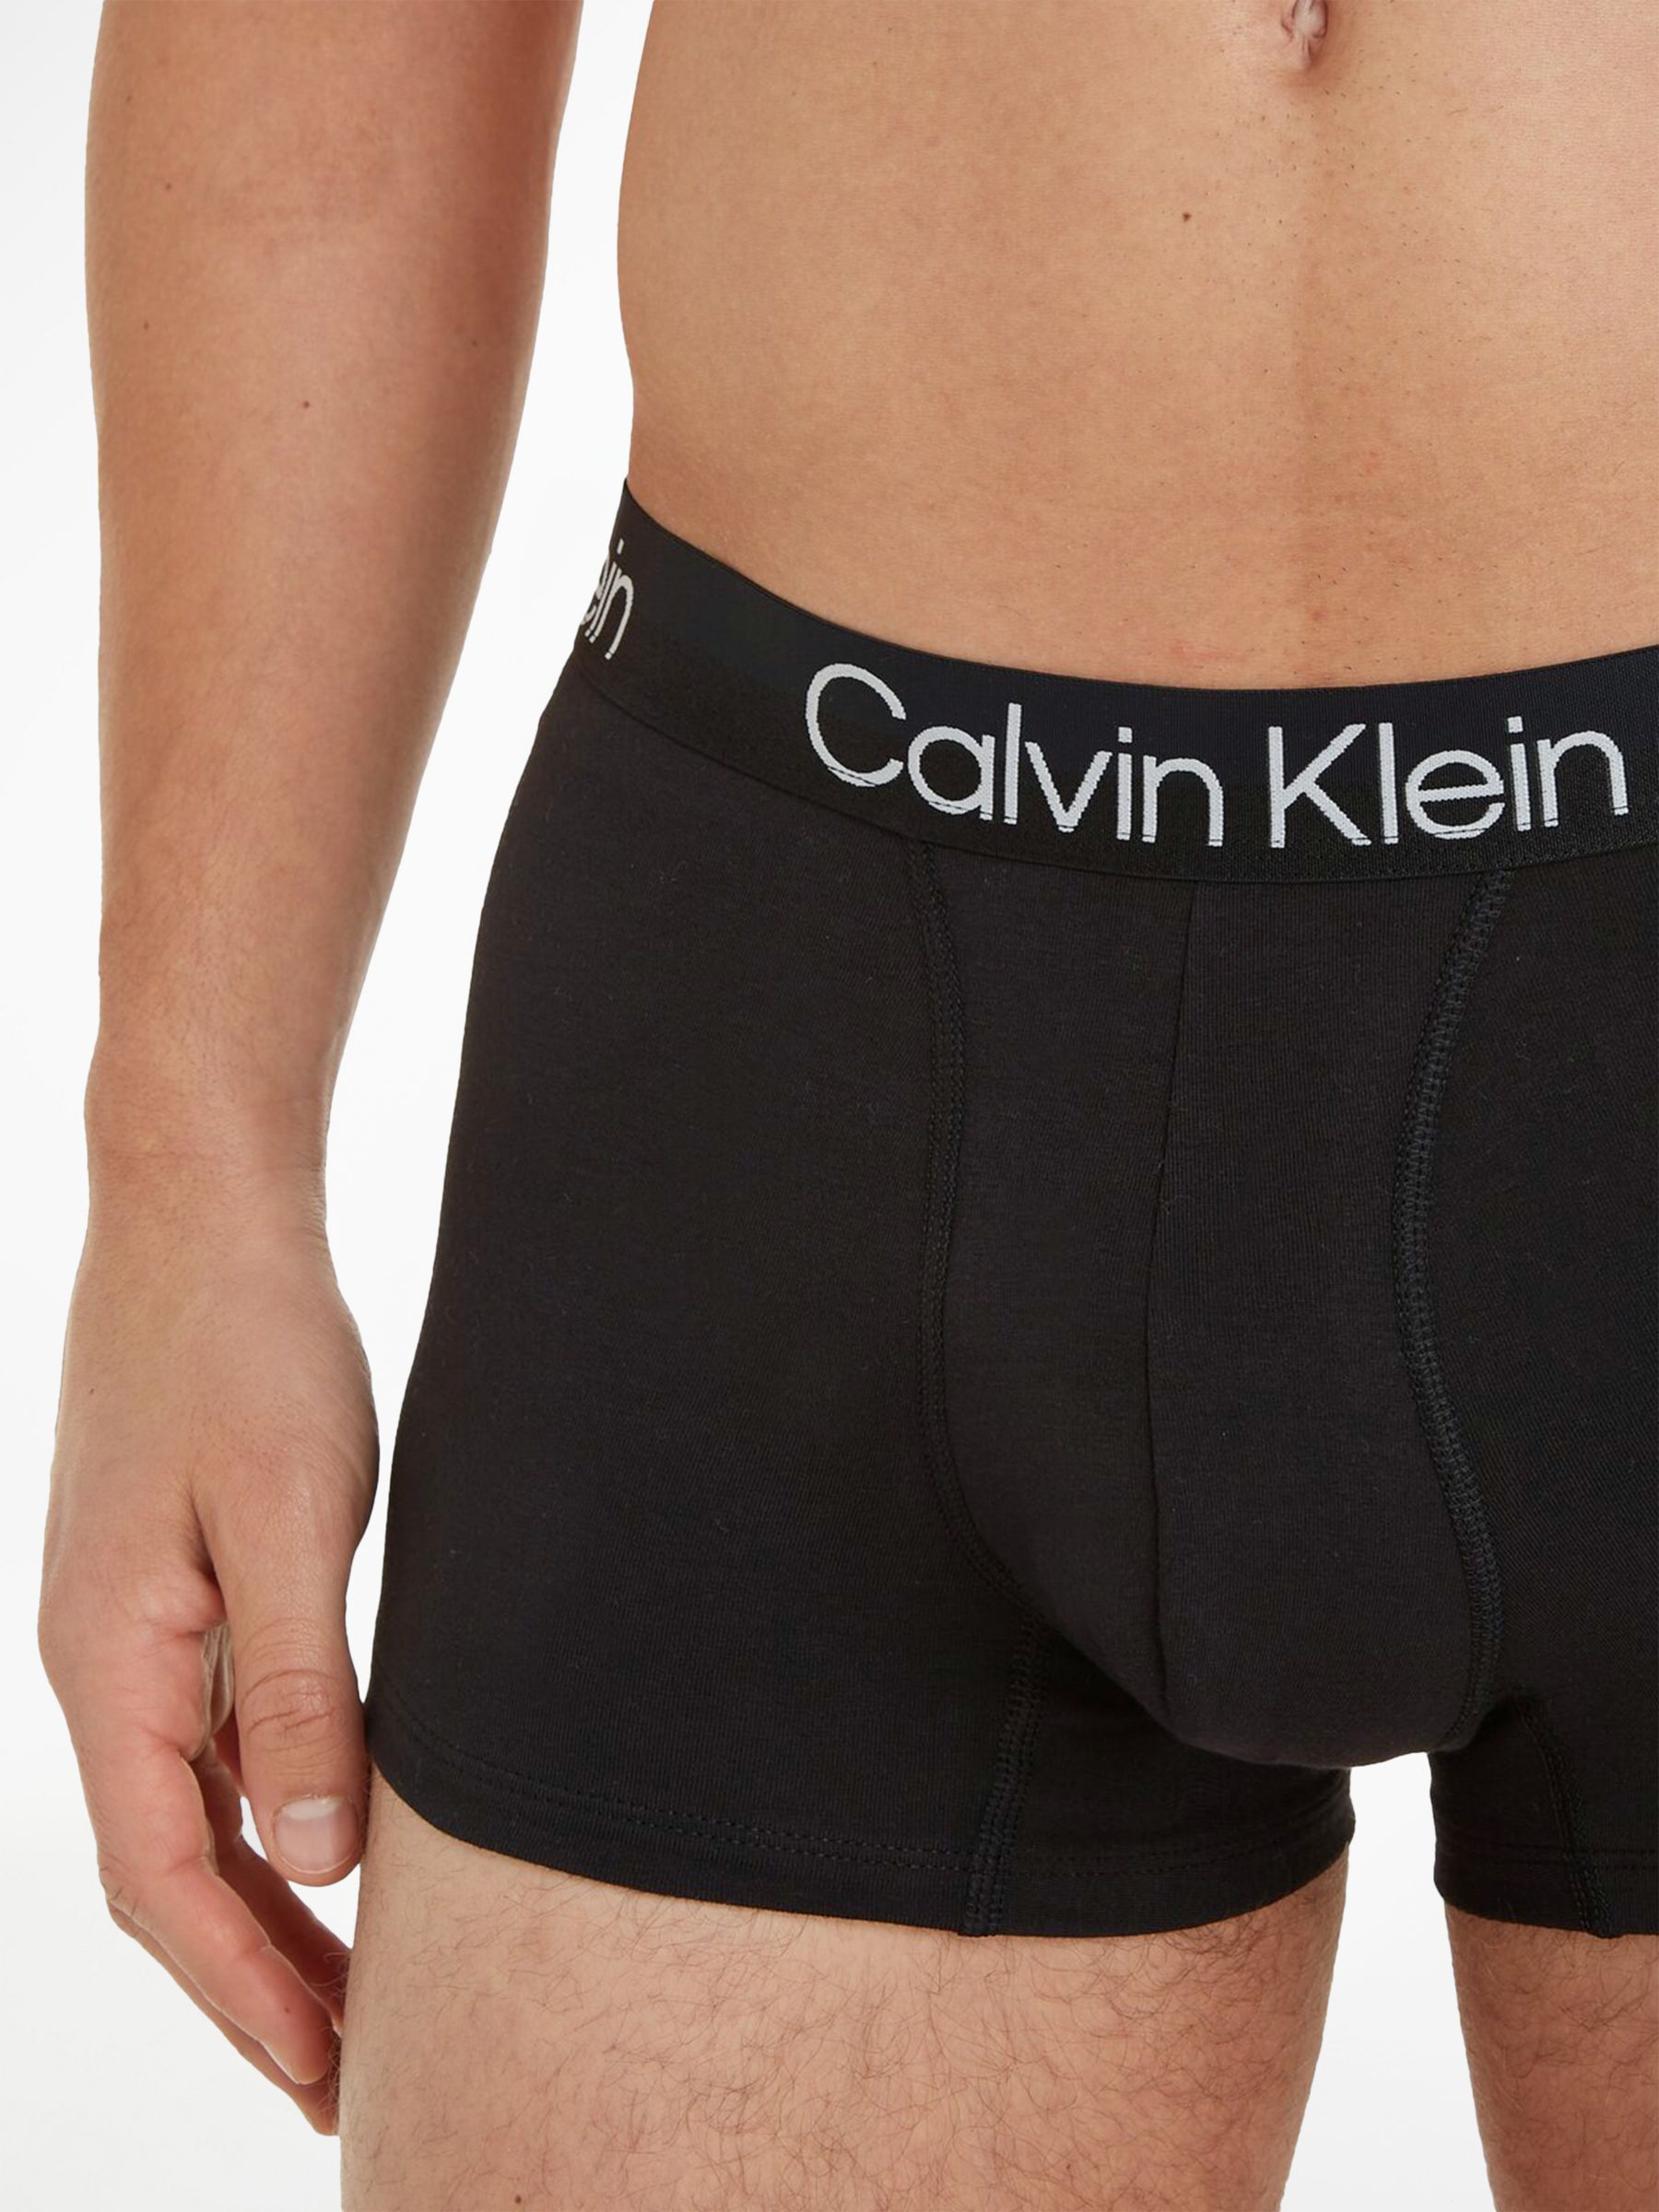 Calvin Klein Cotton Stretch Trunk 3 Pack In Black